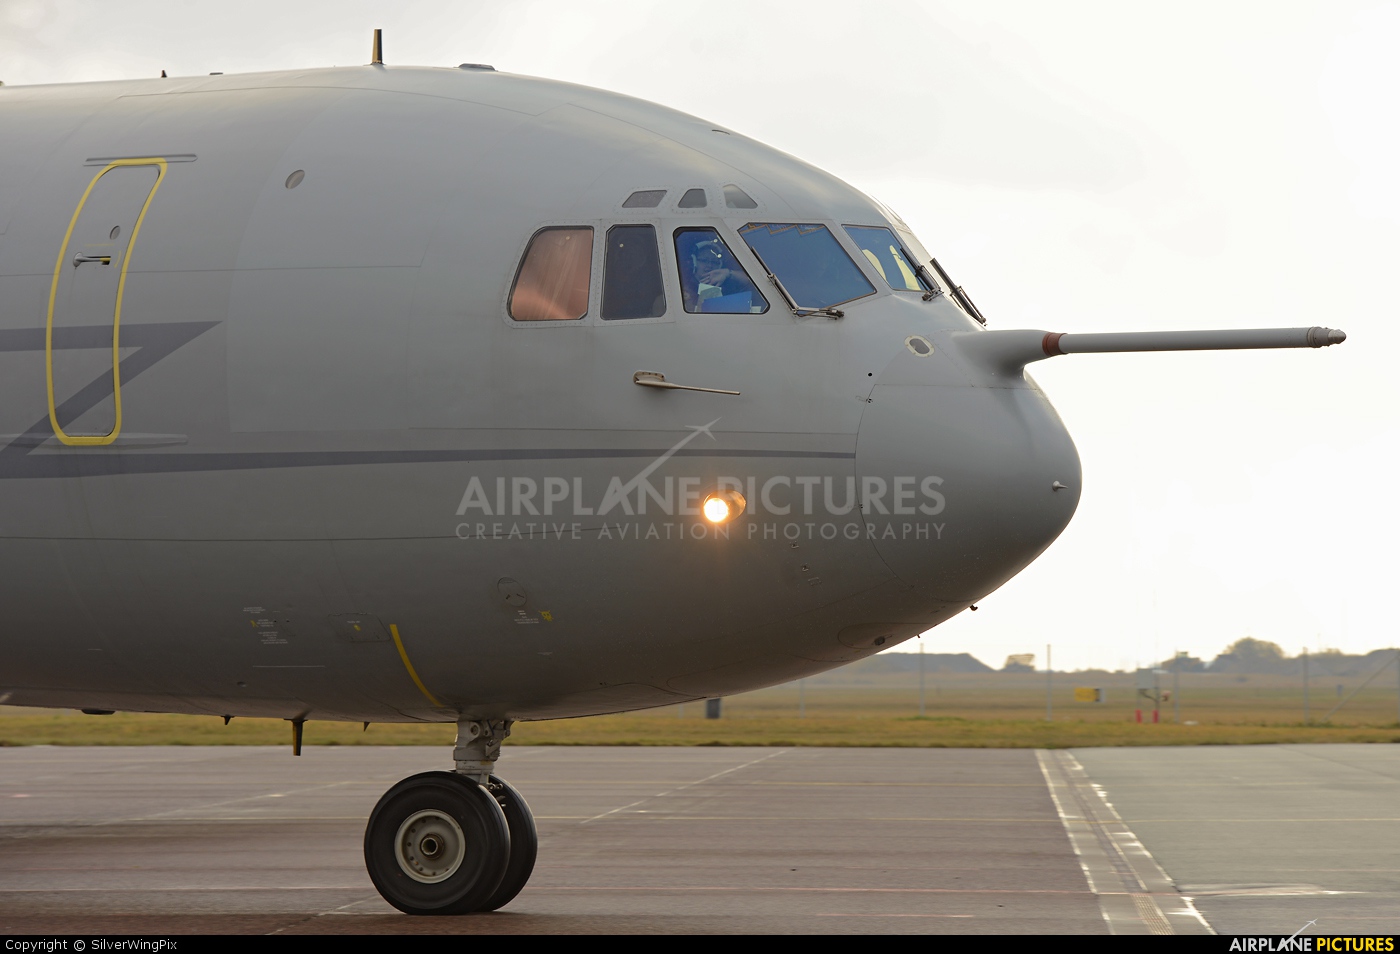 Royal Air Force XR808 aircraft at Undisclosed location